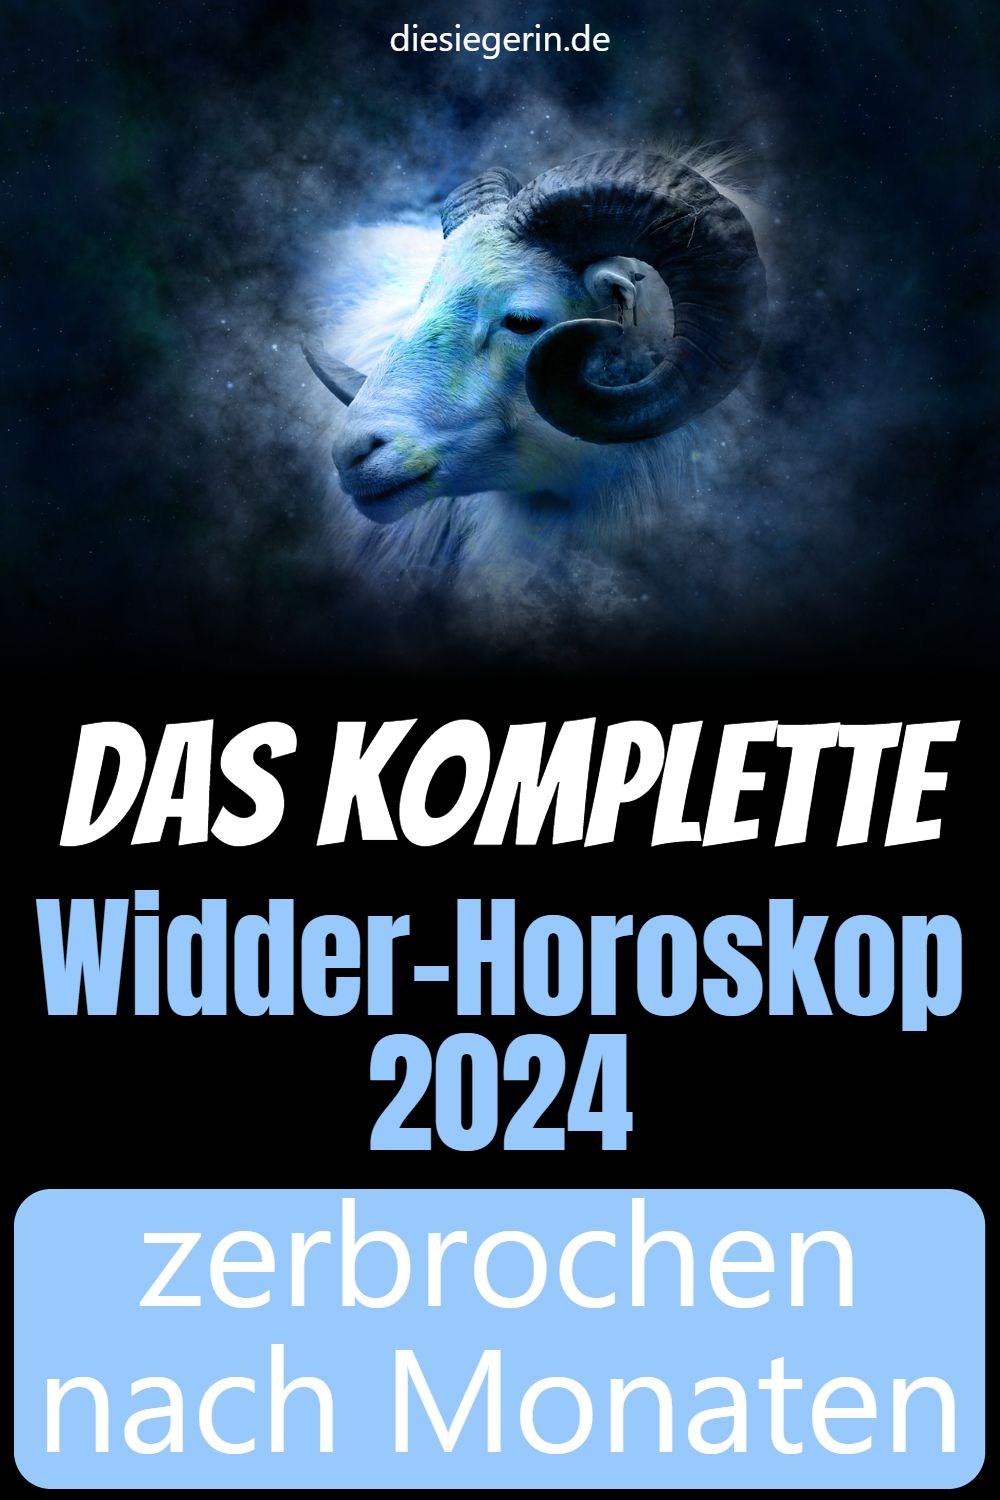 Das komplette Widder-Horoskop 2024 zerbrochen nach Monaten